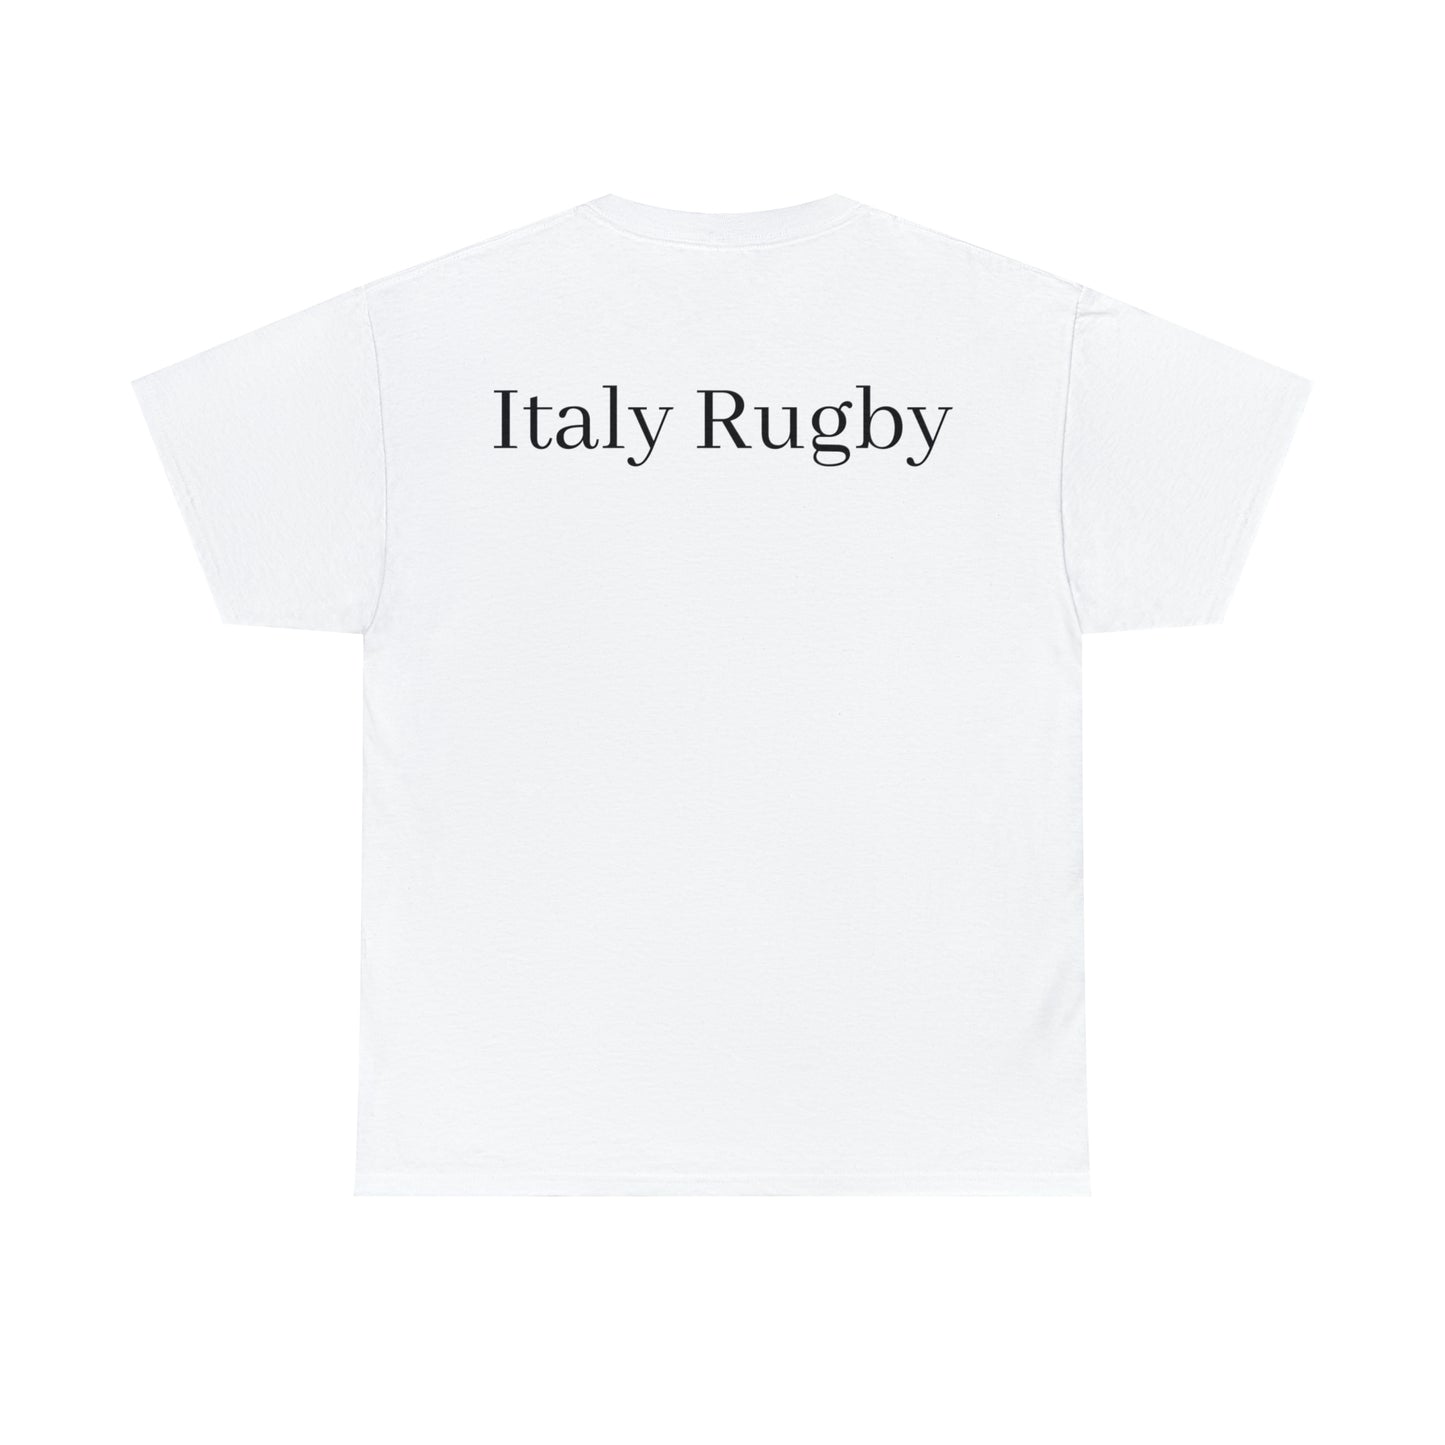 Post Match Italy - light shirts